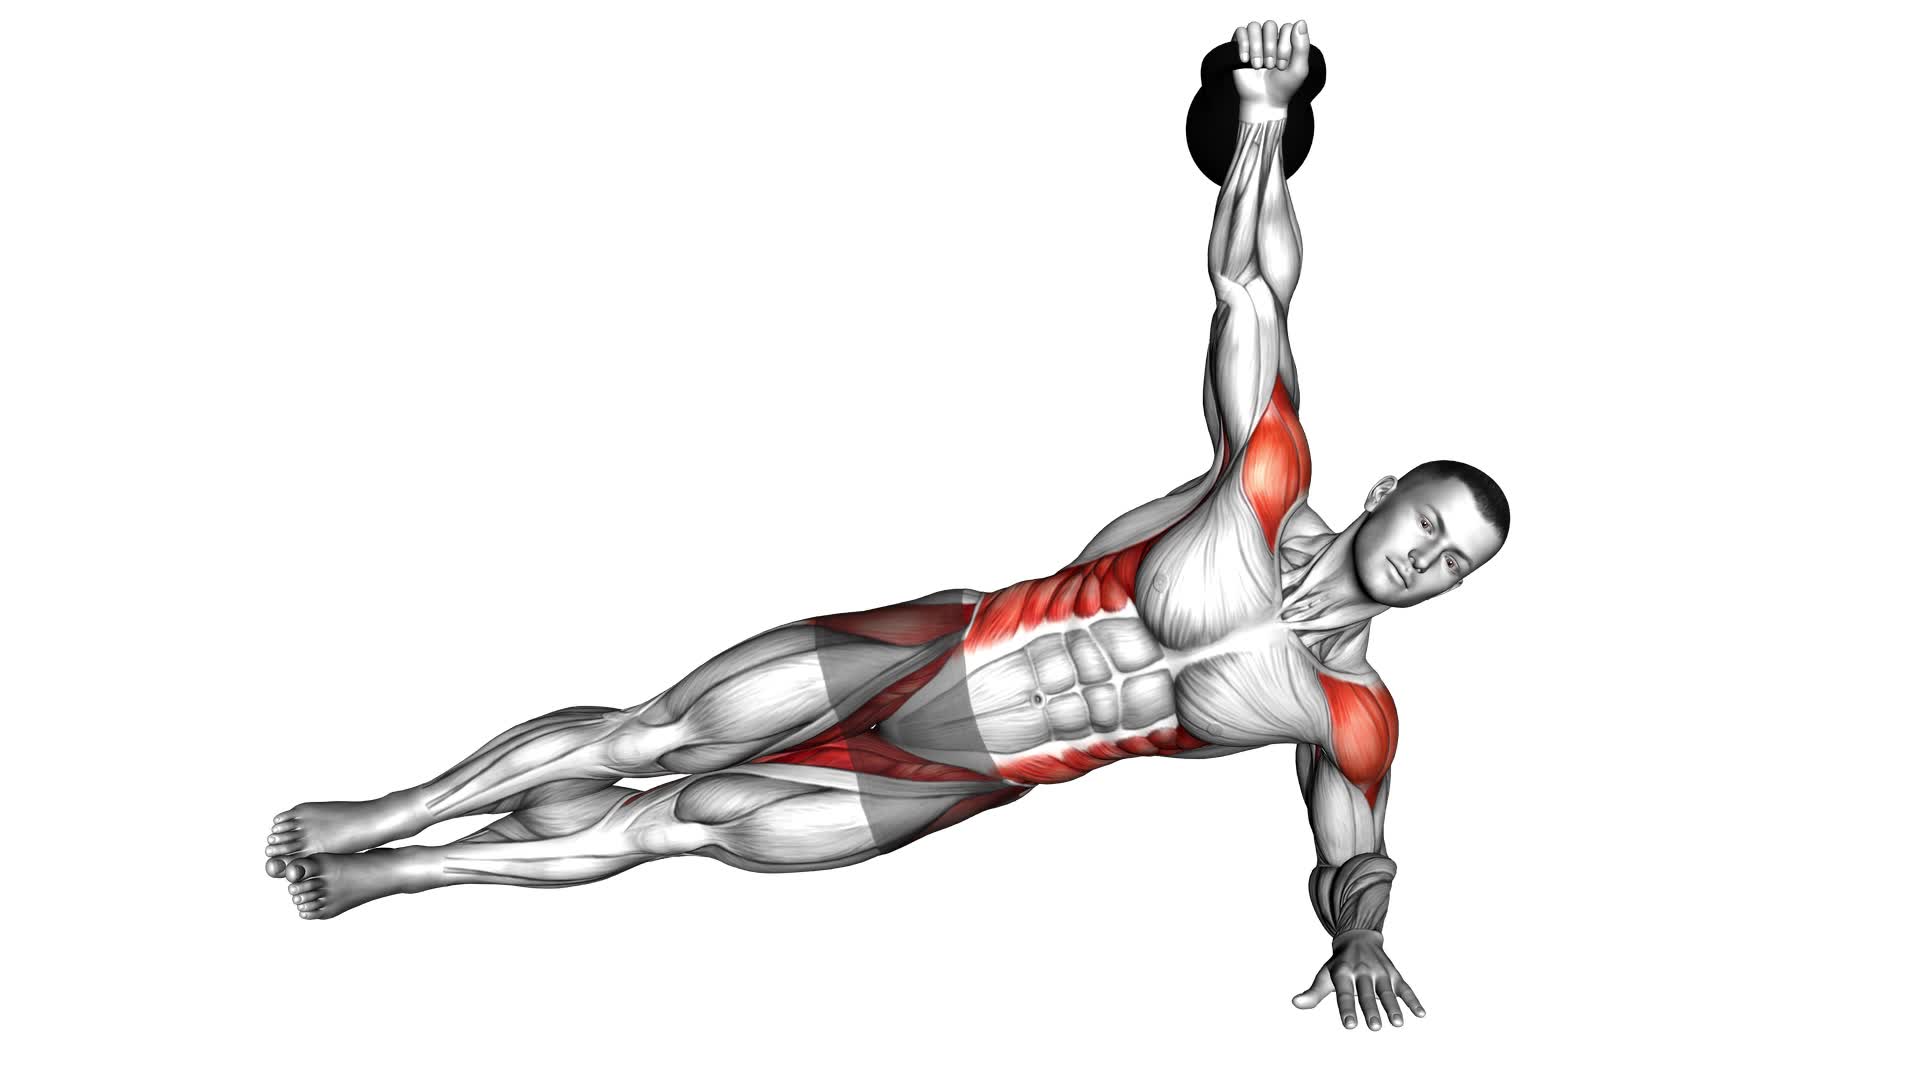 Kettlebell Side Plank (male) - Video Exercise Guide & Tips